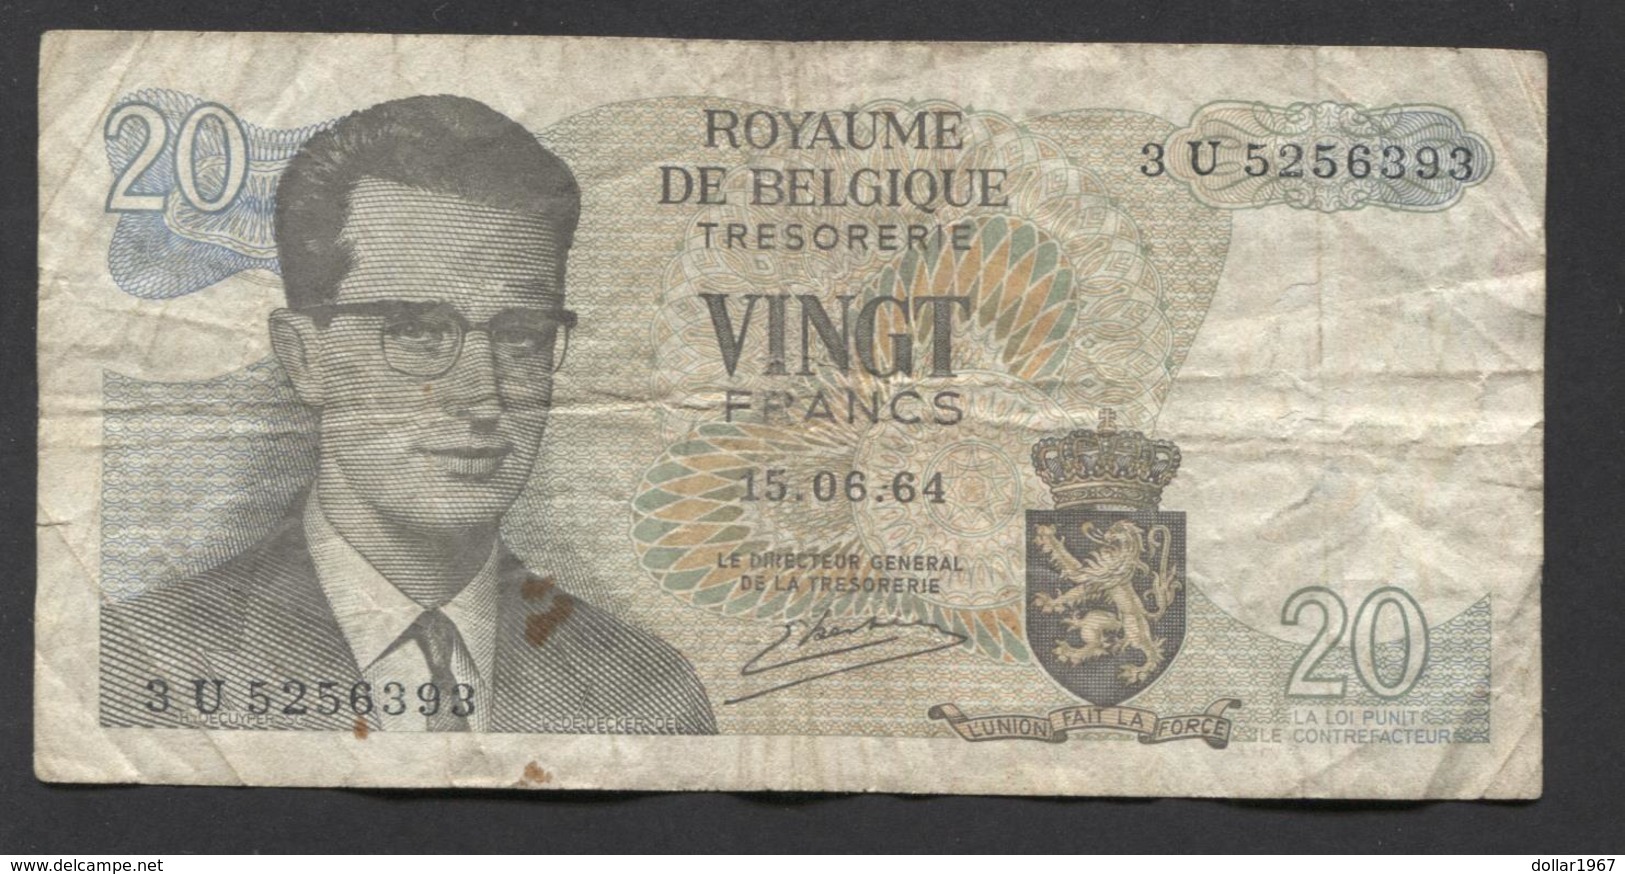 België Belgique Belgium 15 06 1964 -  20 Francs Atomium Baudouin. 3 U 5256393 - 20 Franchi